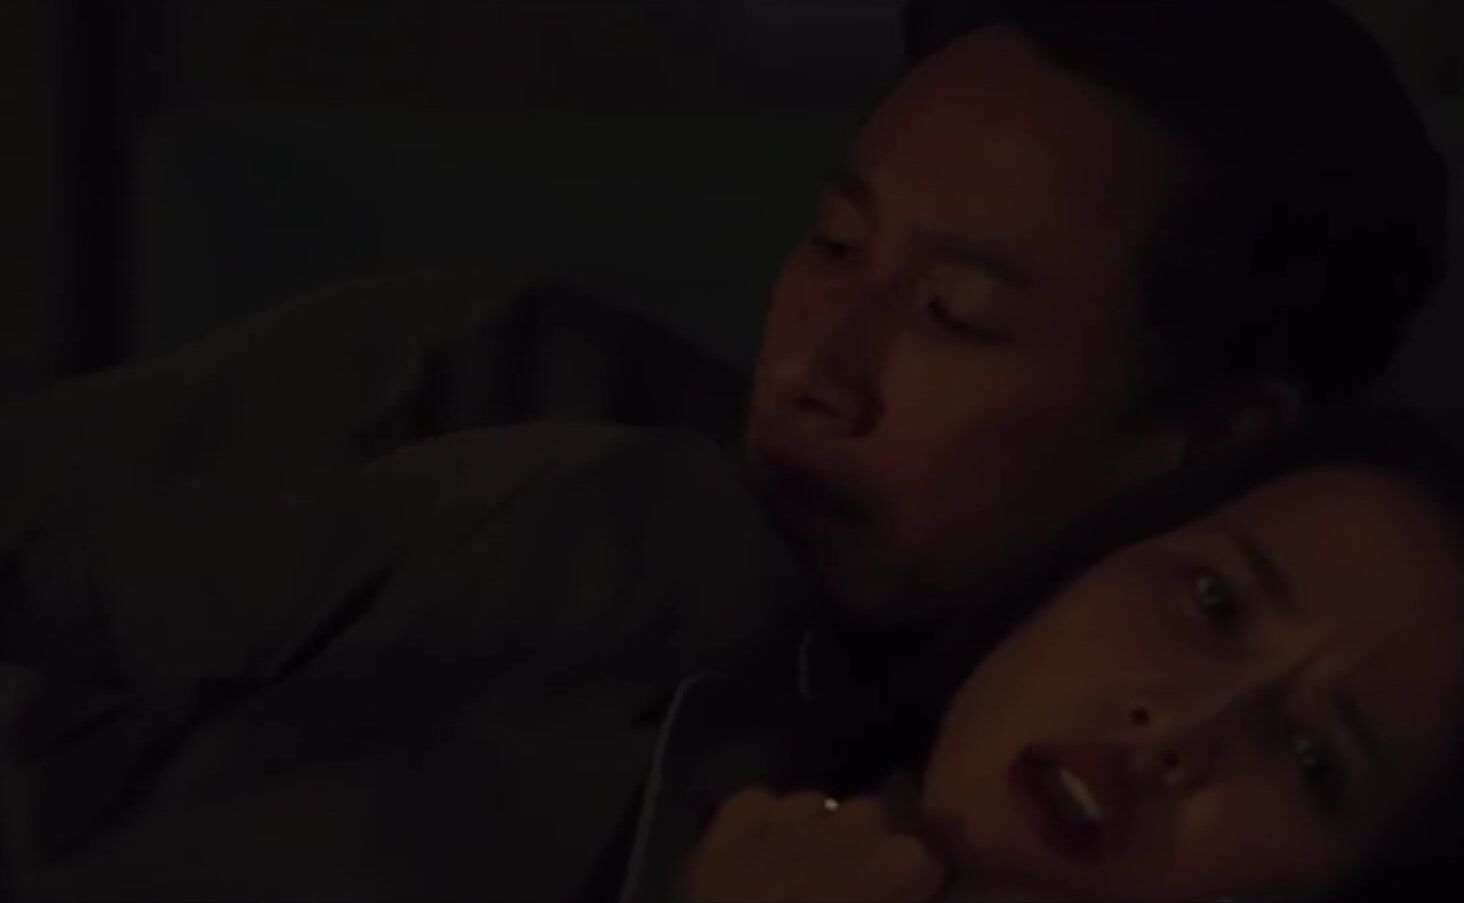 Joven Korean movie Parasite mutual masturbation explicit moment with Jo Yeo-jeong Latin - 1